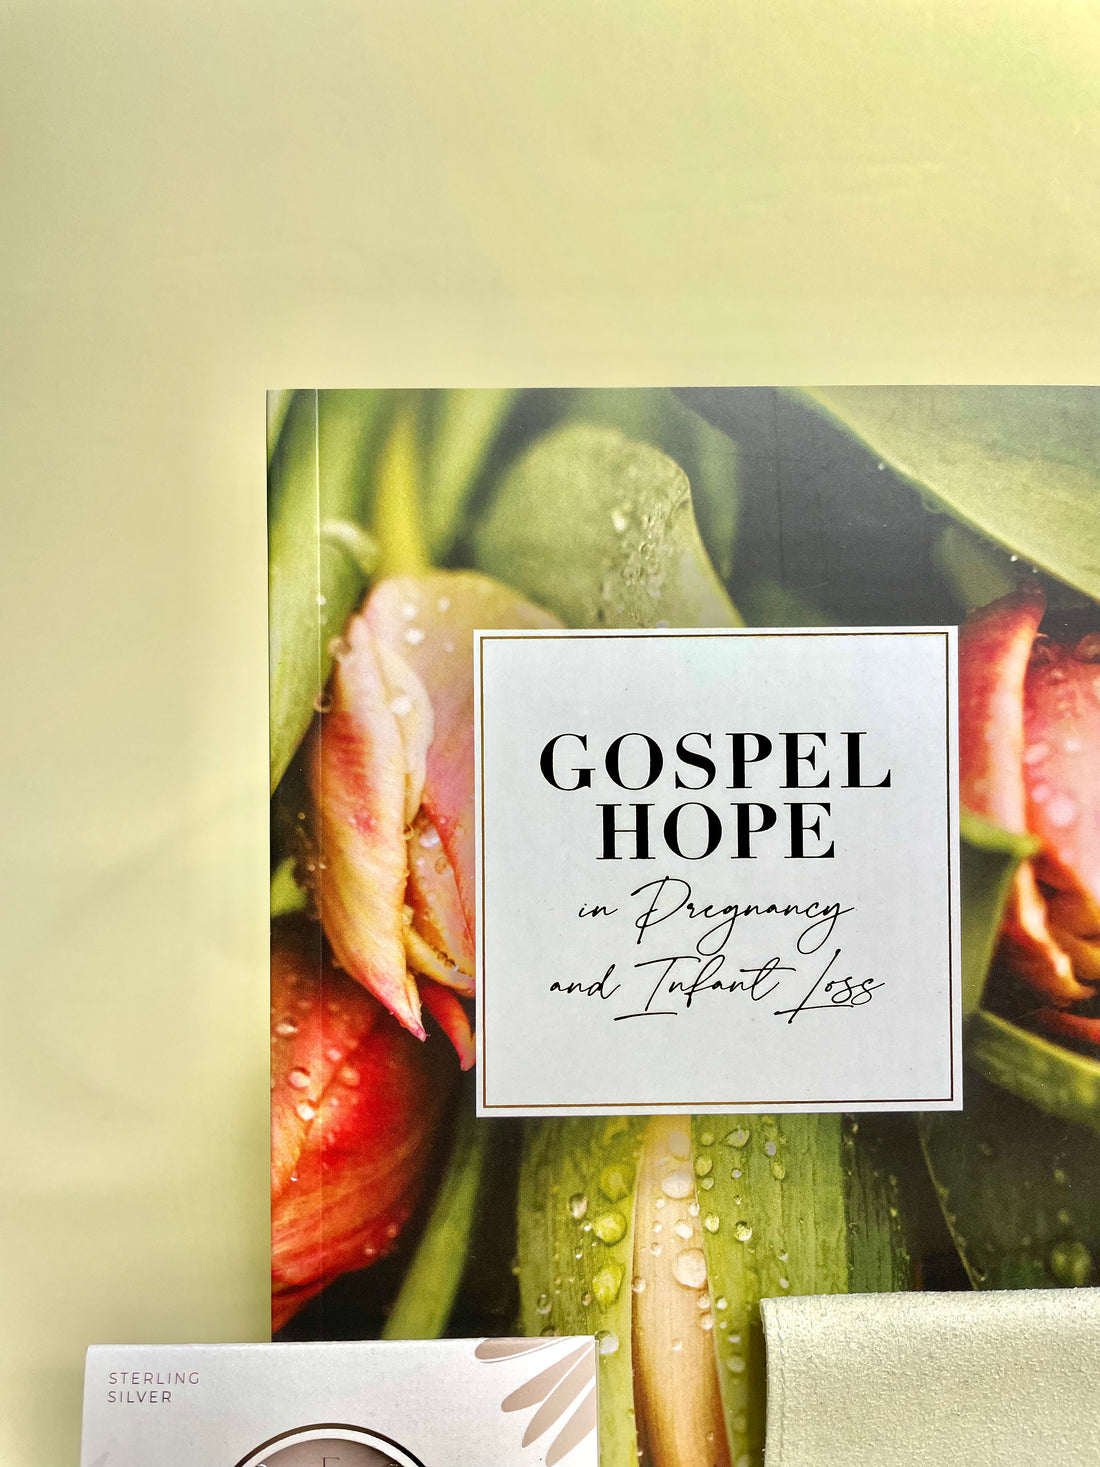 Gospel Hope in Pregnancy and Infant Loss